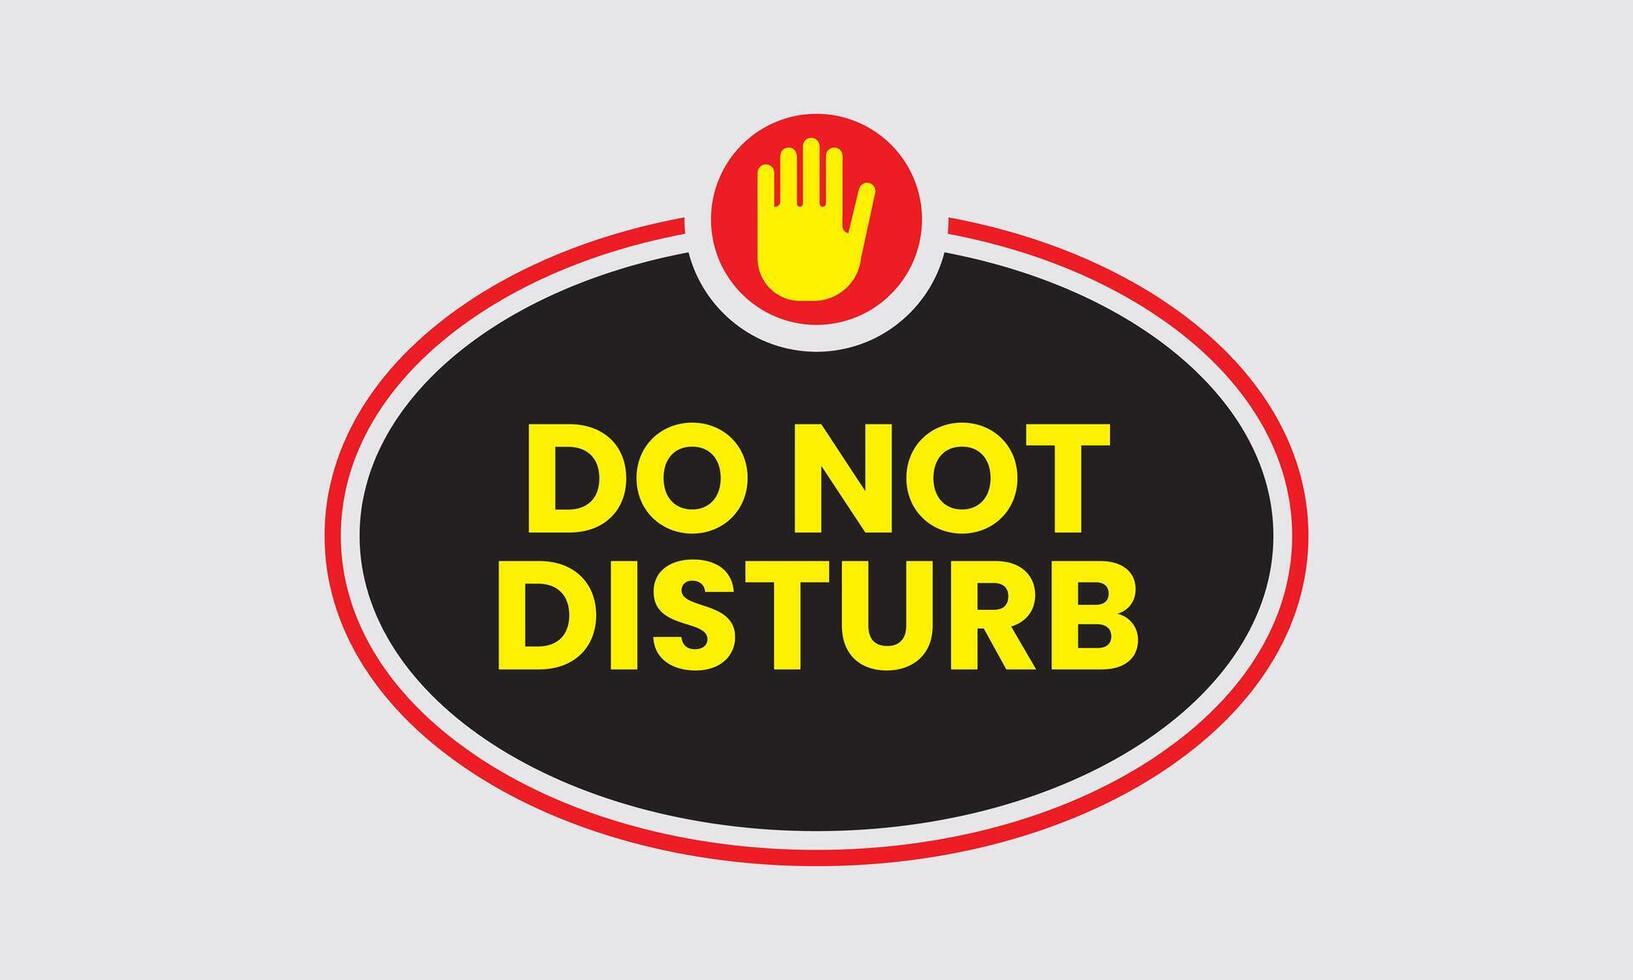 Do Not Disturb Signs board logo label stock vector Illustration